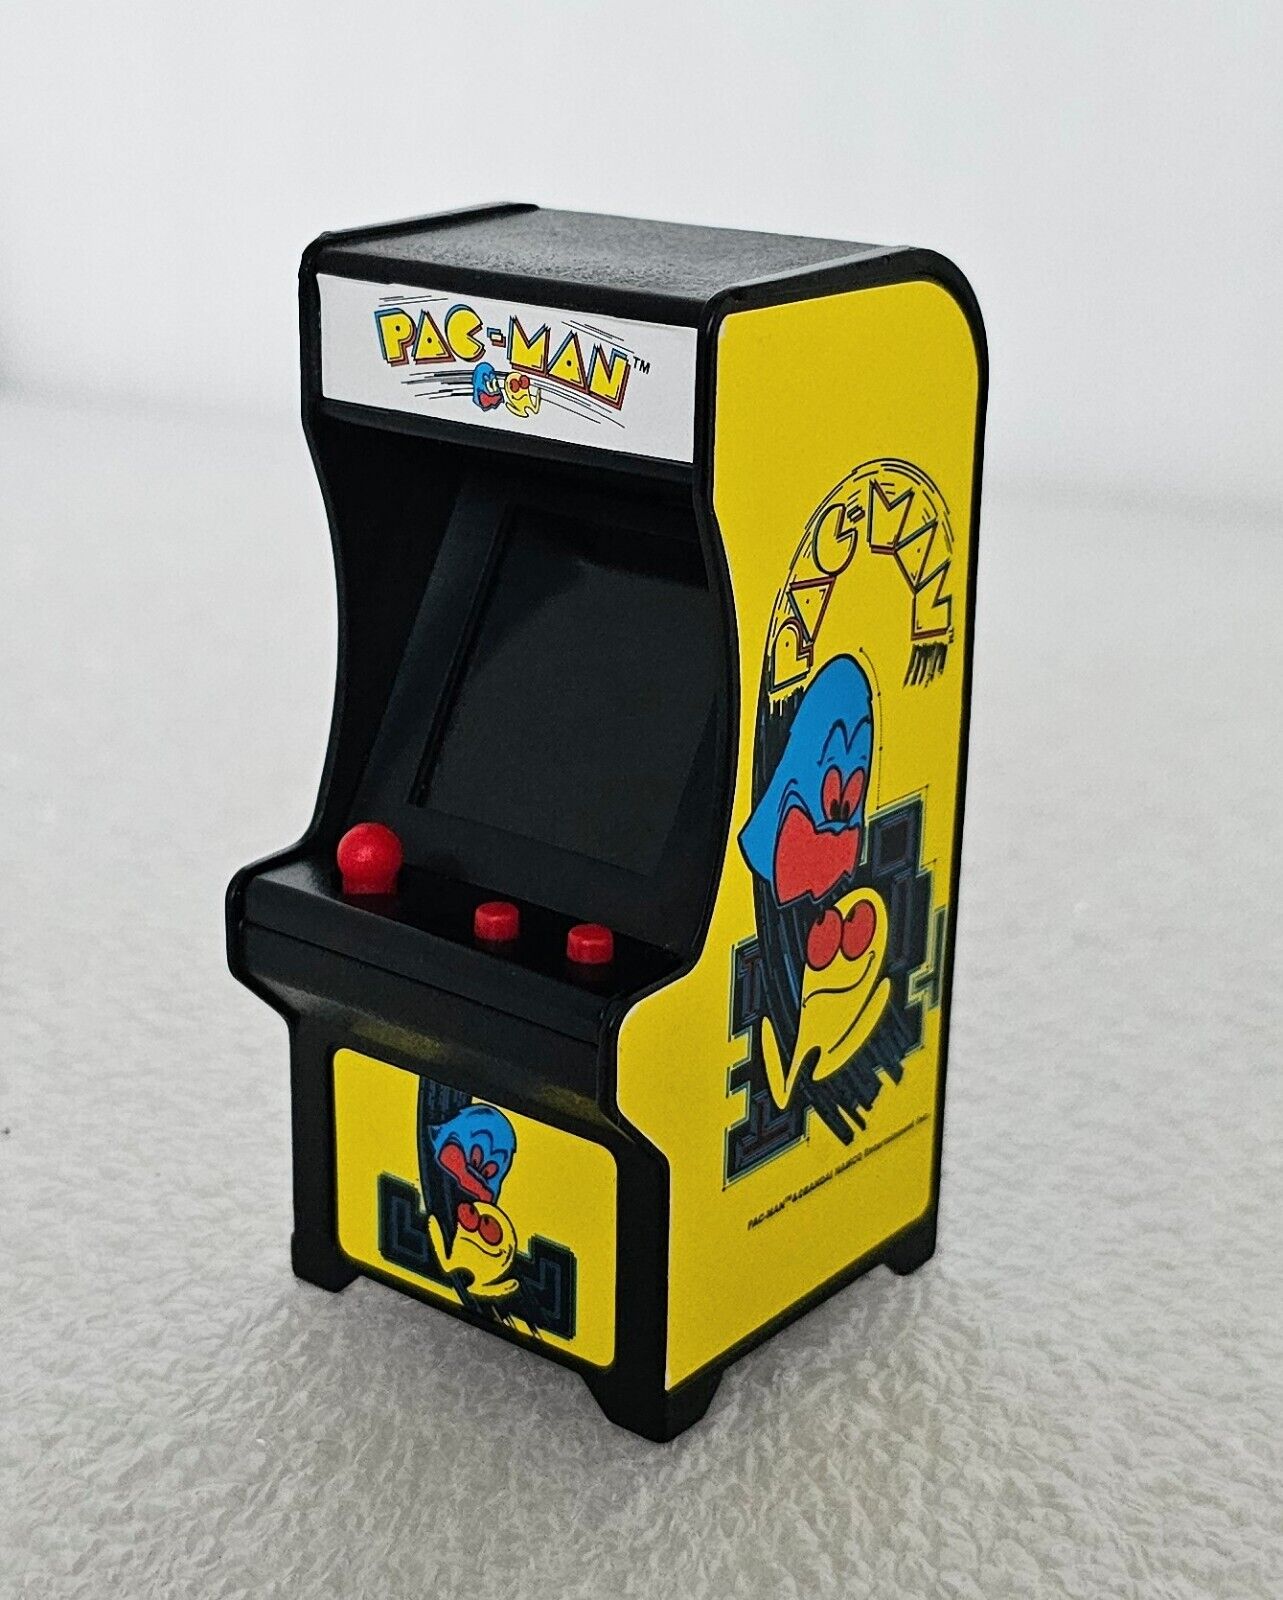 Pac-Man Keychain Arcade Game 2019 Bandai Namco Mini Handheld Game Tested